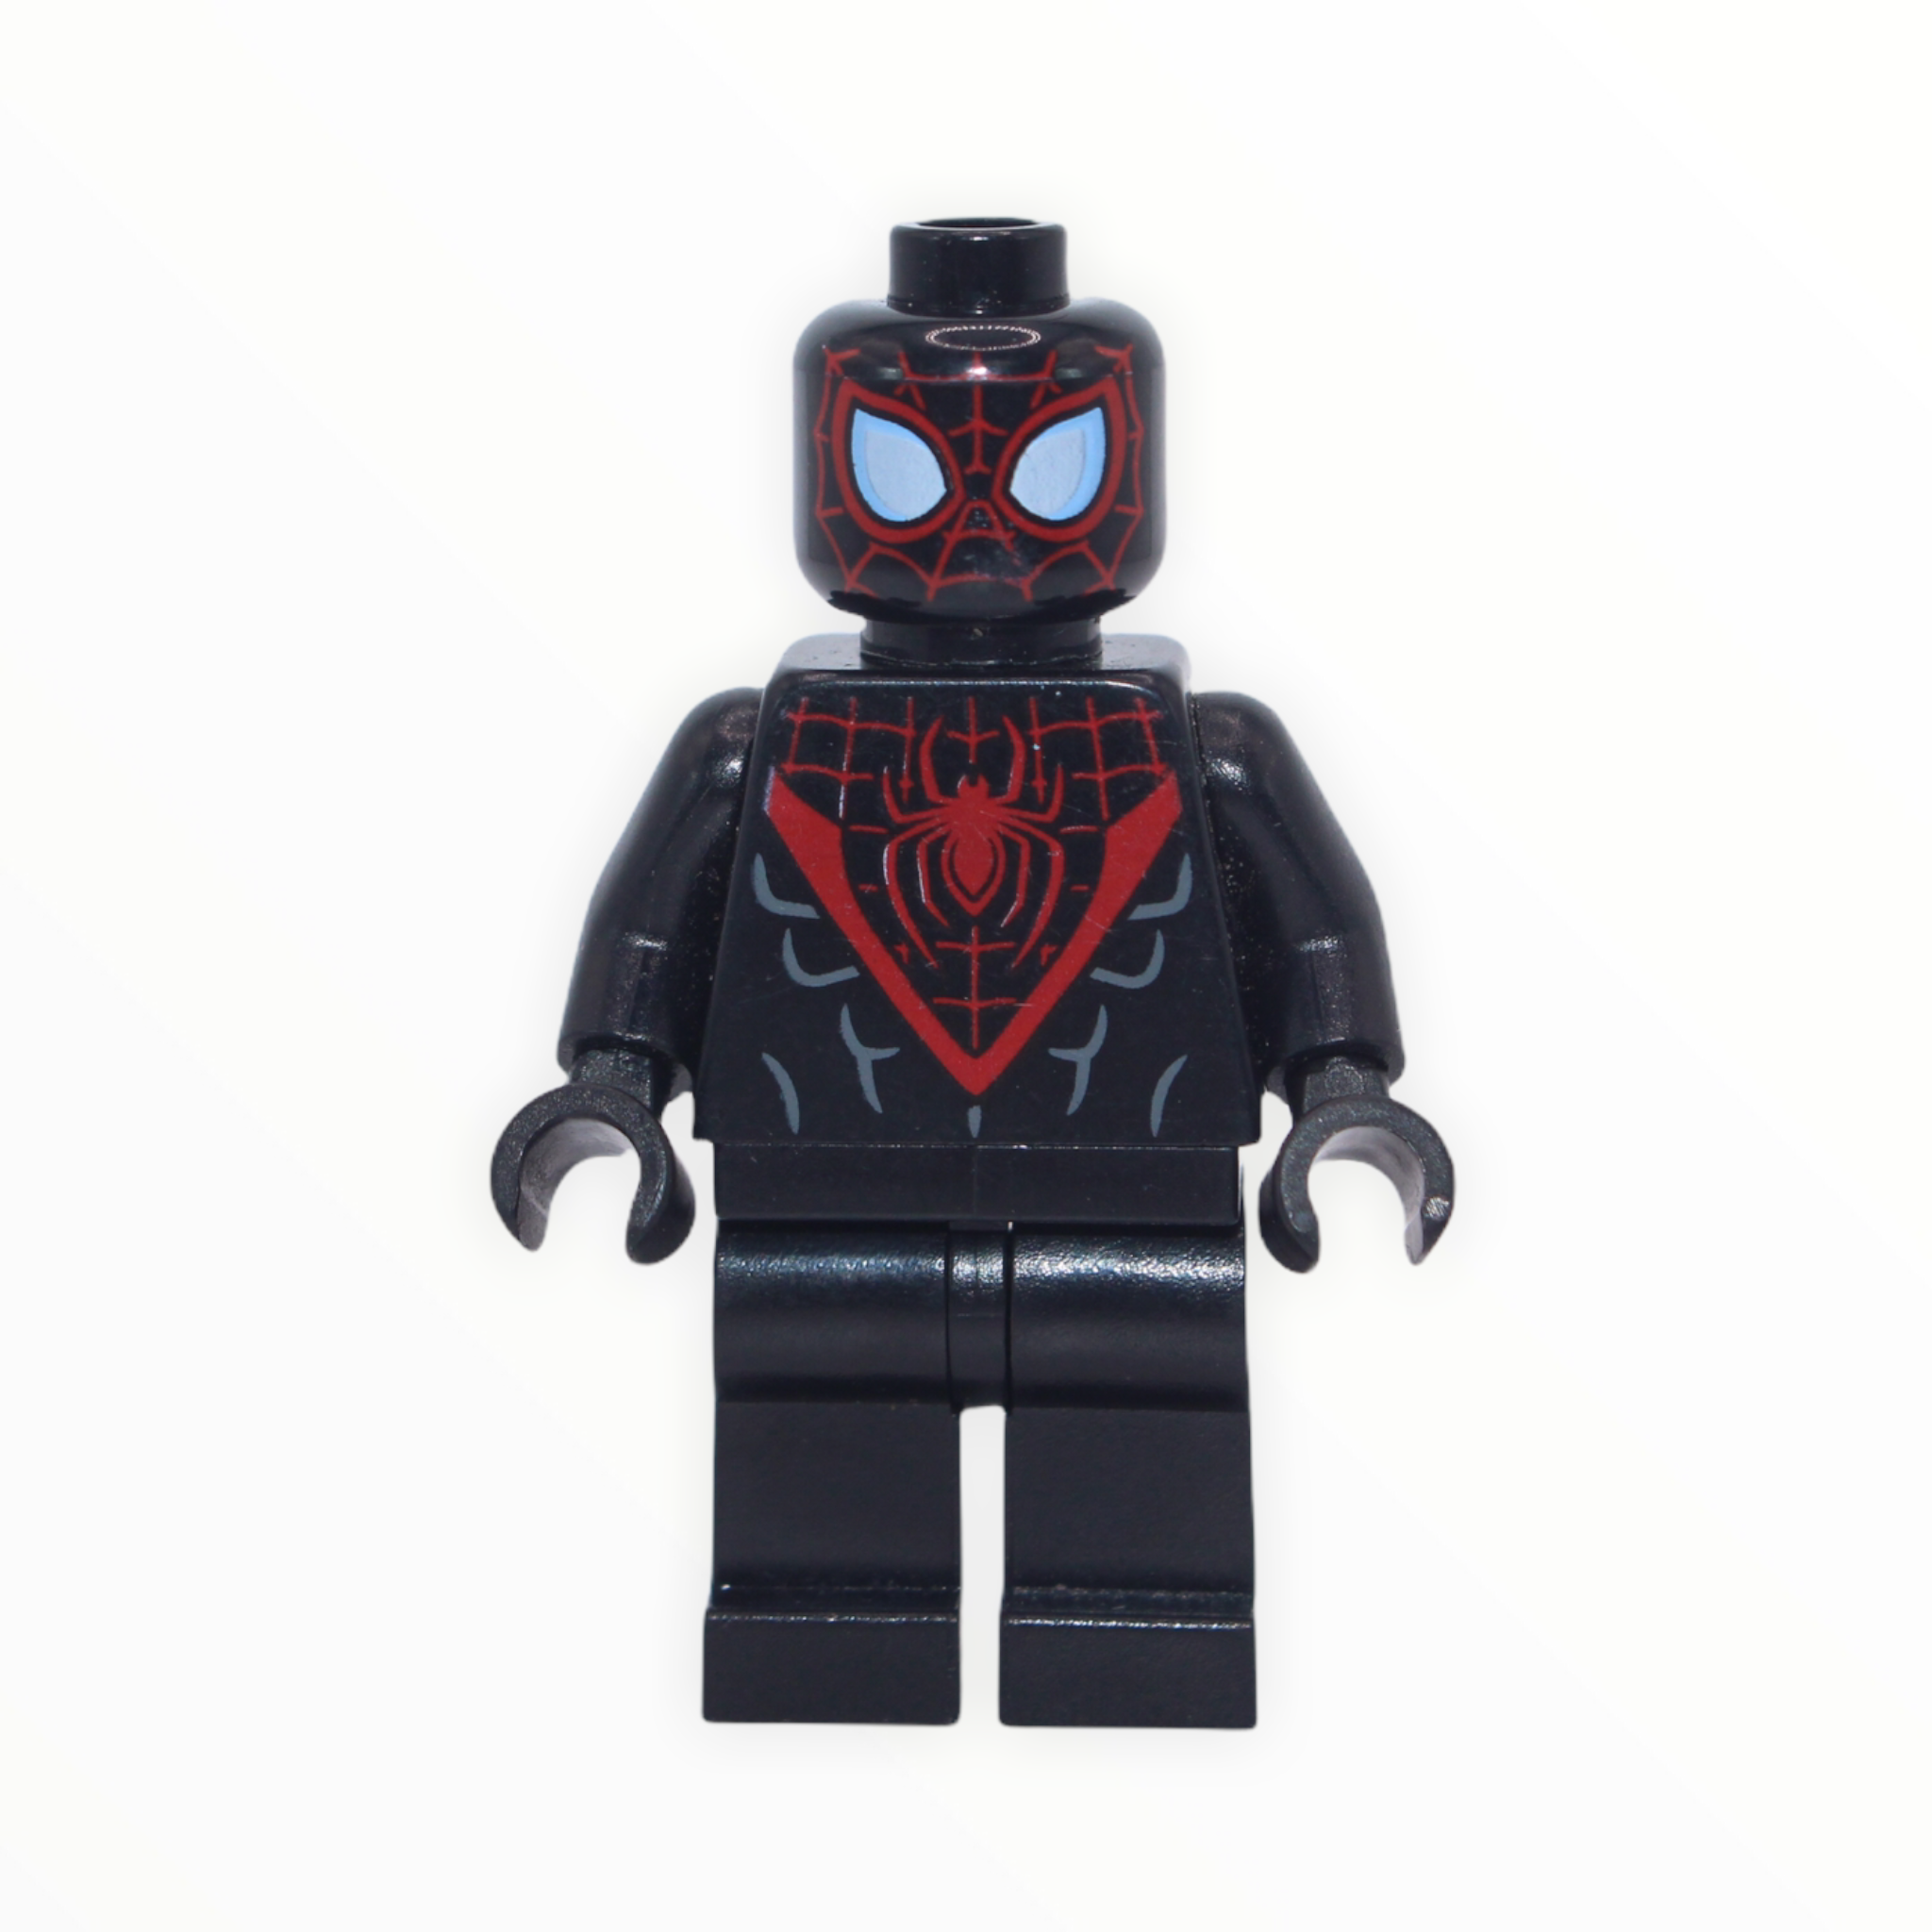 Spider-Man Miles Morales (616 Universe, black hands, 2019)